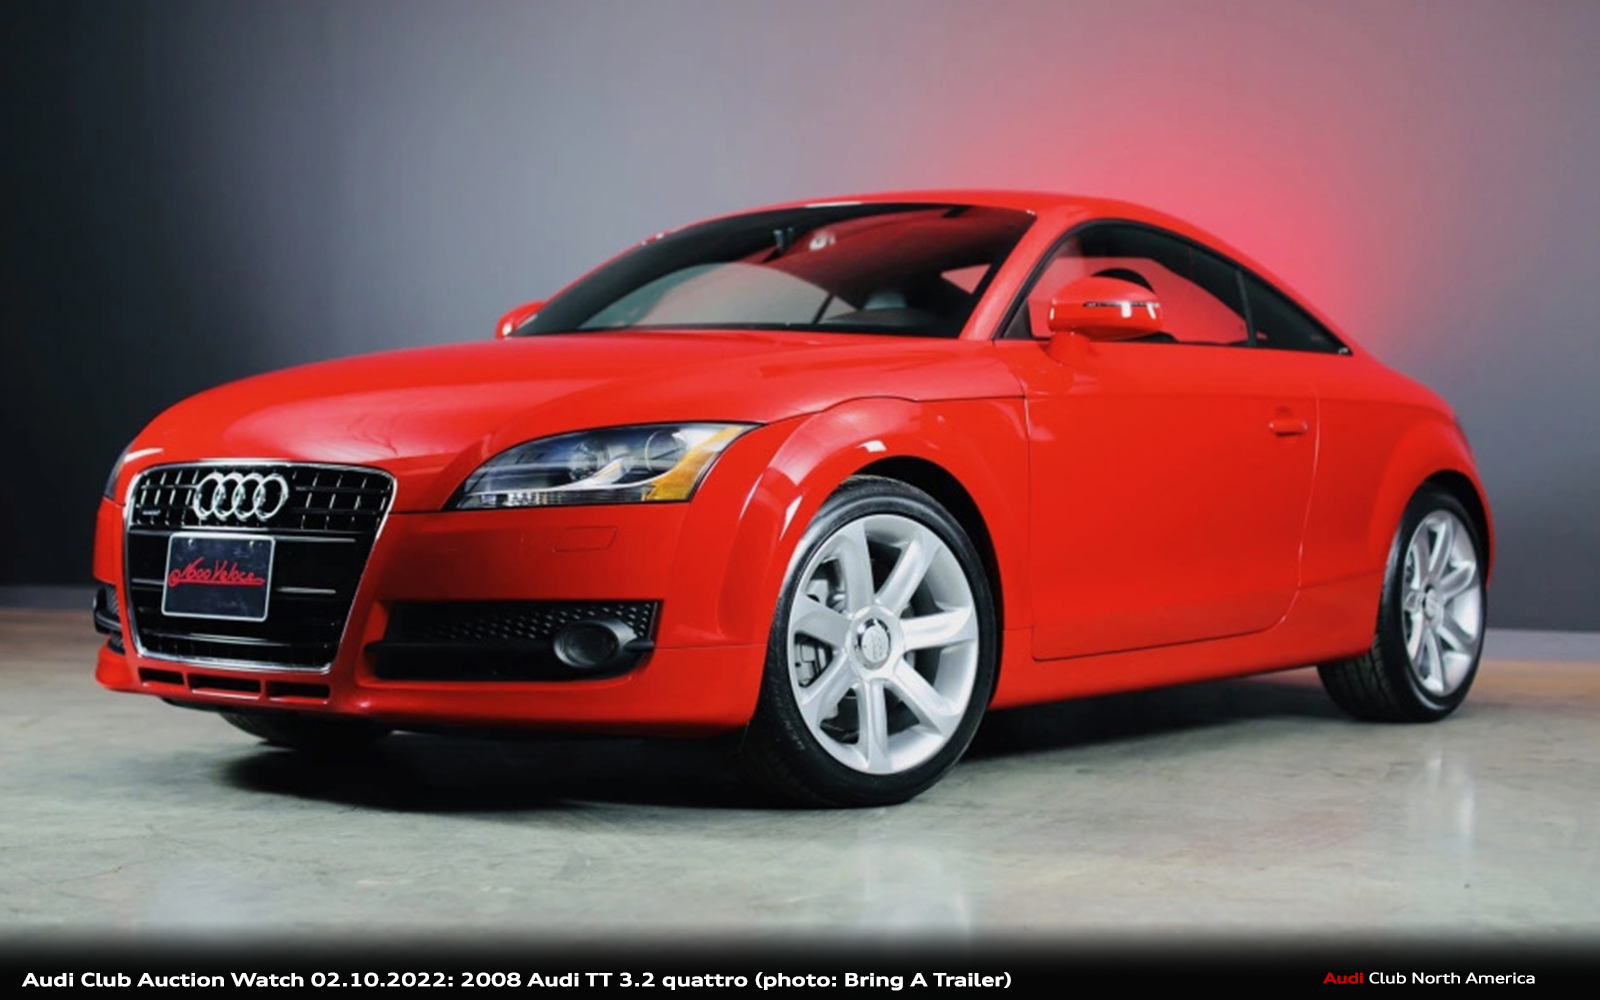 Audi Club Auction Watch: 02.10.2022 ...